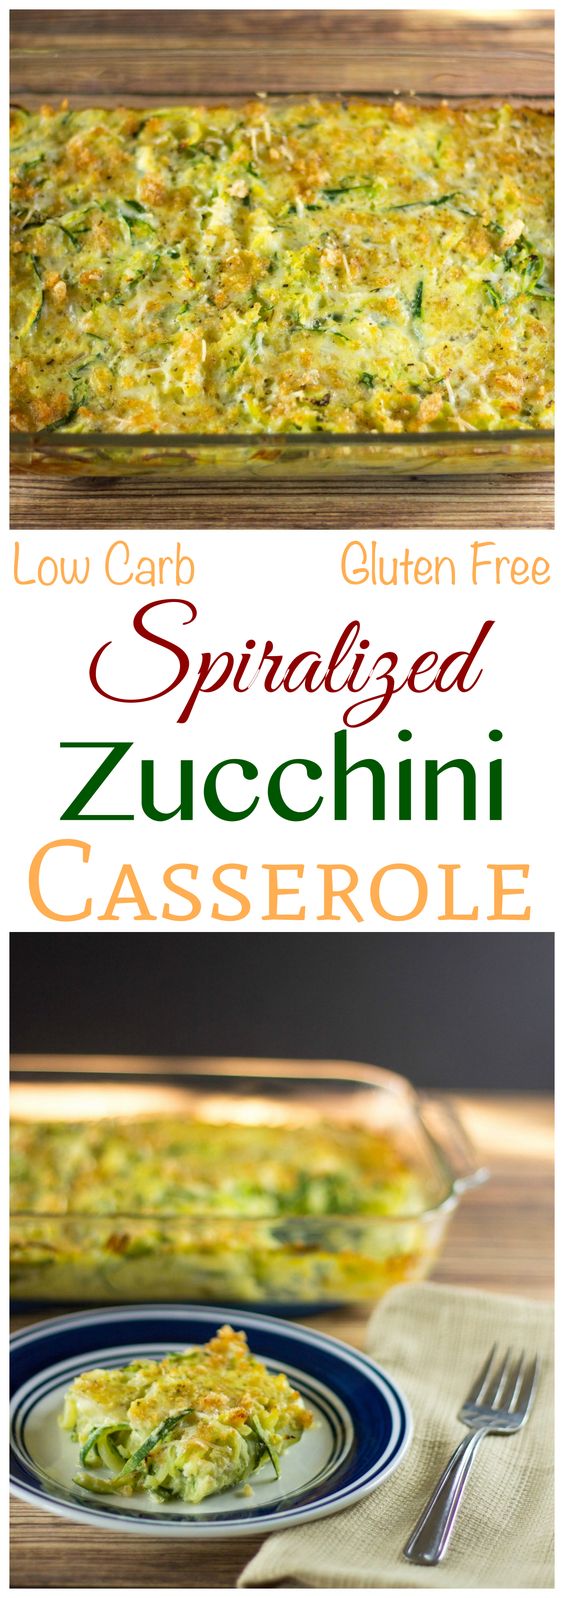 Spiralized Zucchini Casserole Recipe - Tasty Recipedia